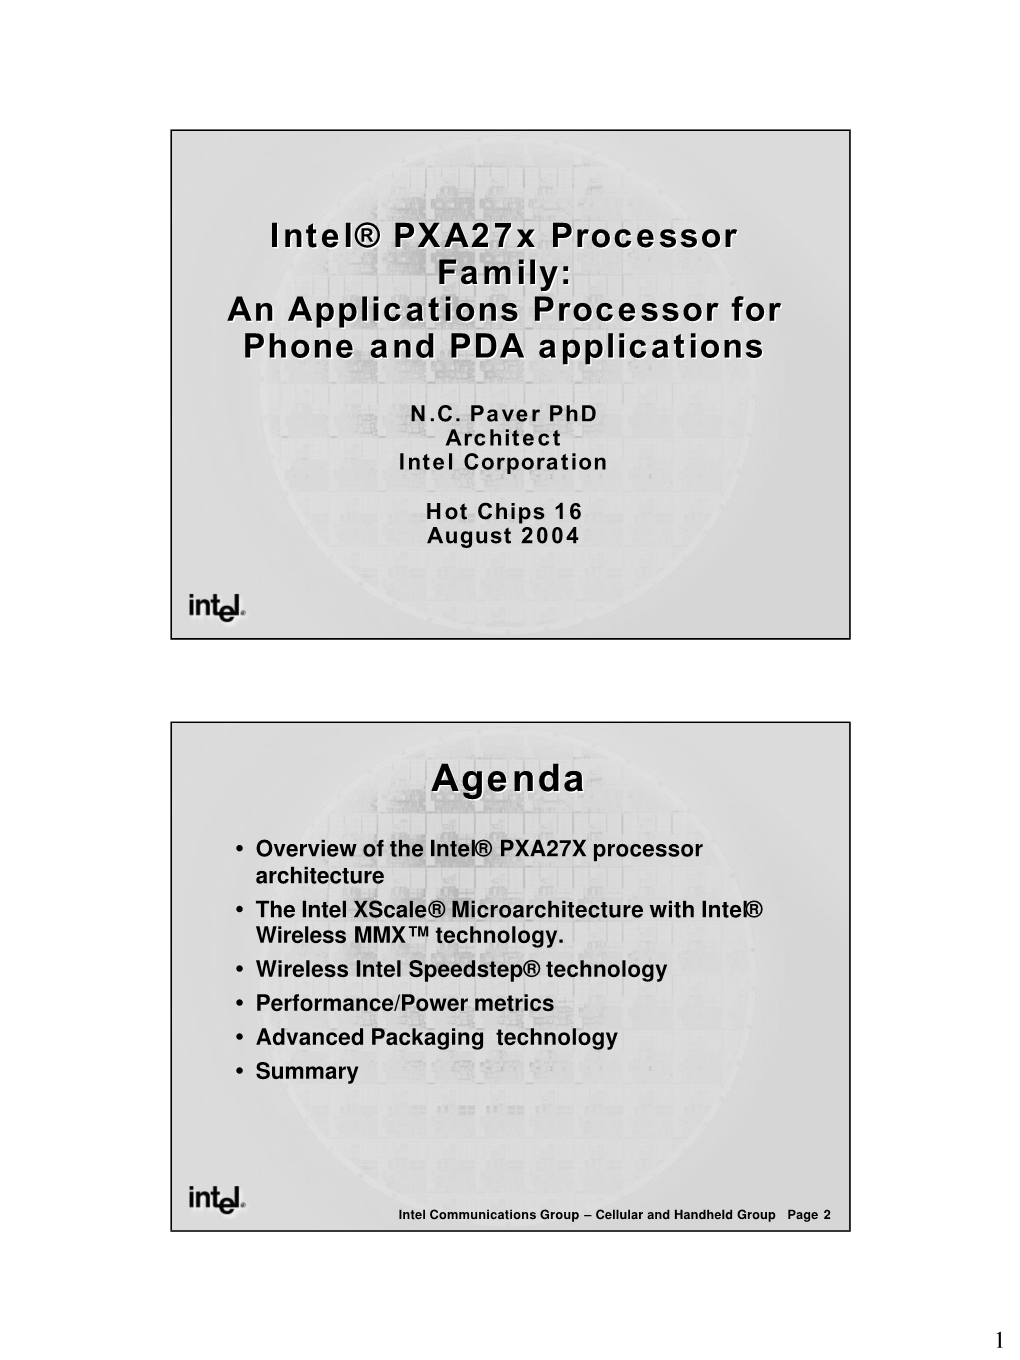 Intel® PXA270 Processor Block Diagram